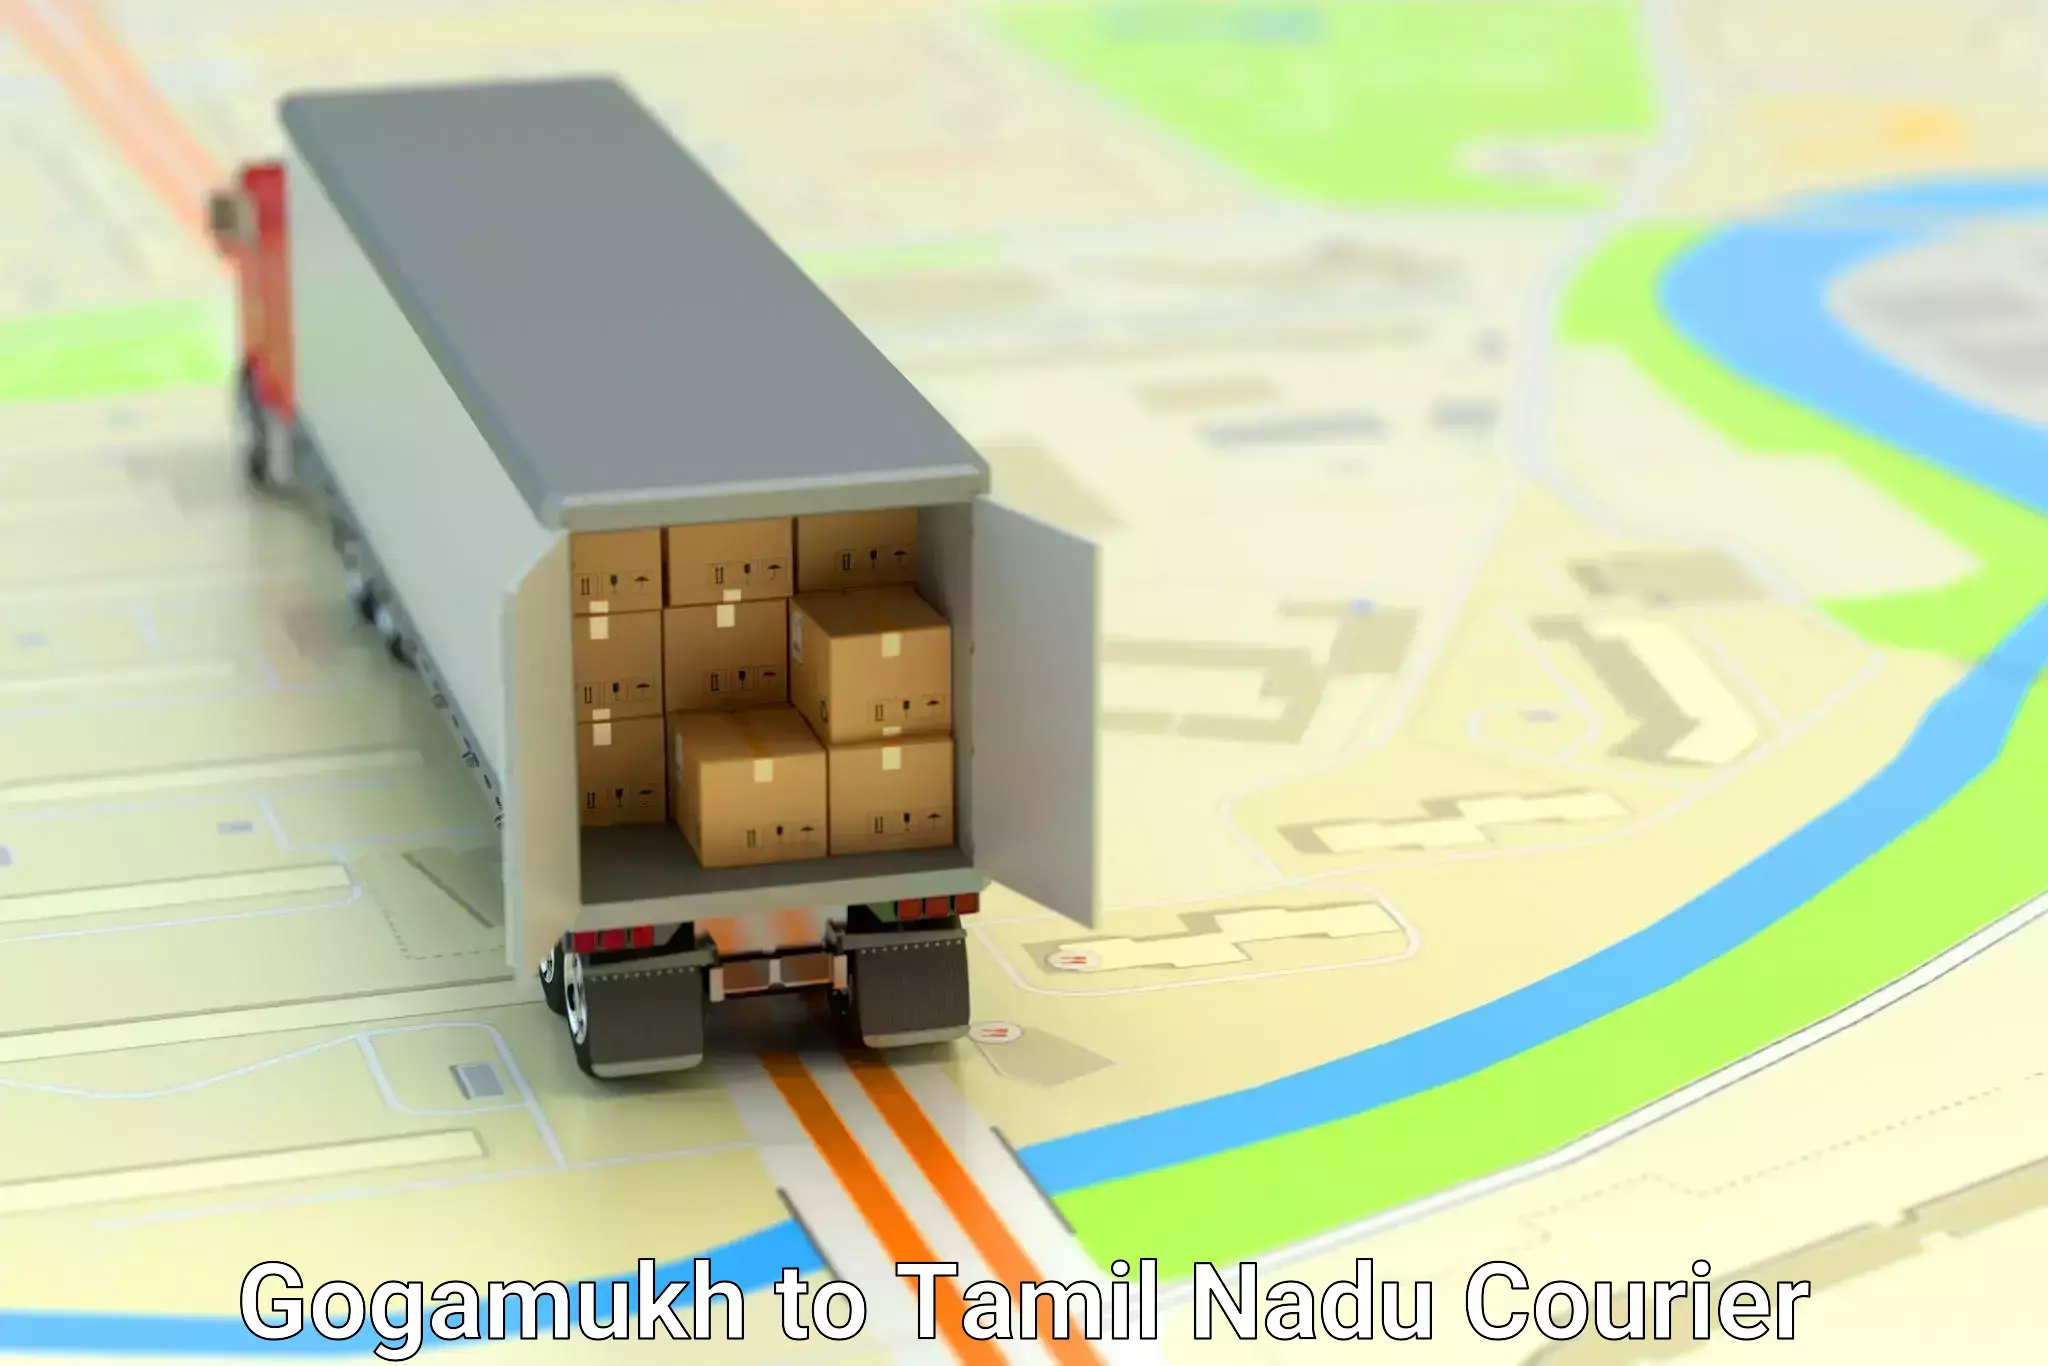 Fast-track shipping solutions Gogamukh to Chennai